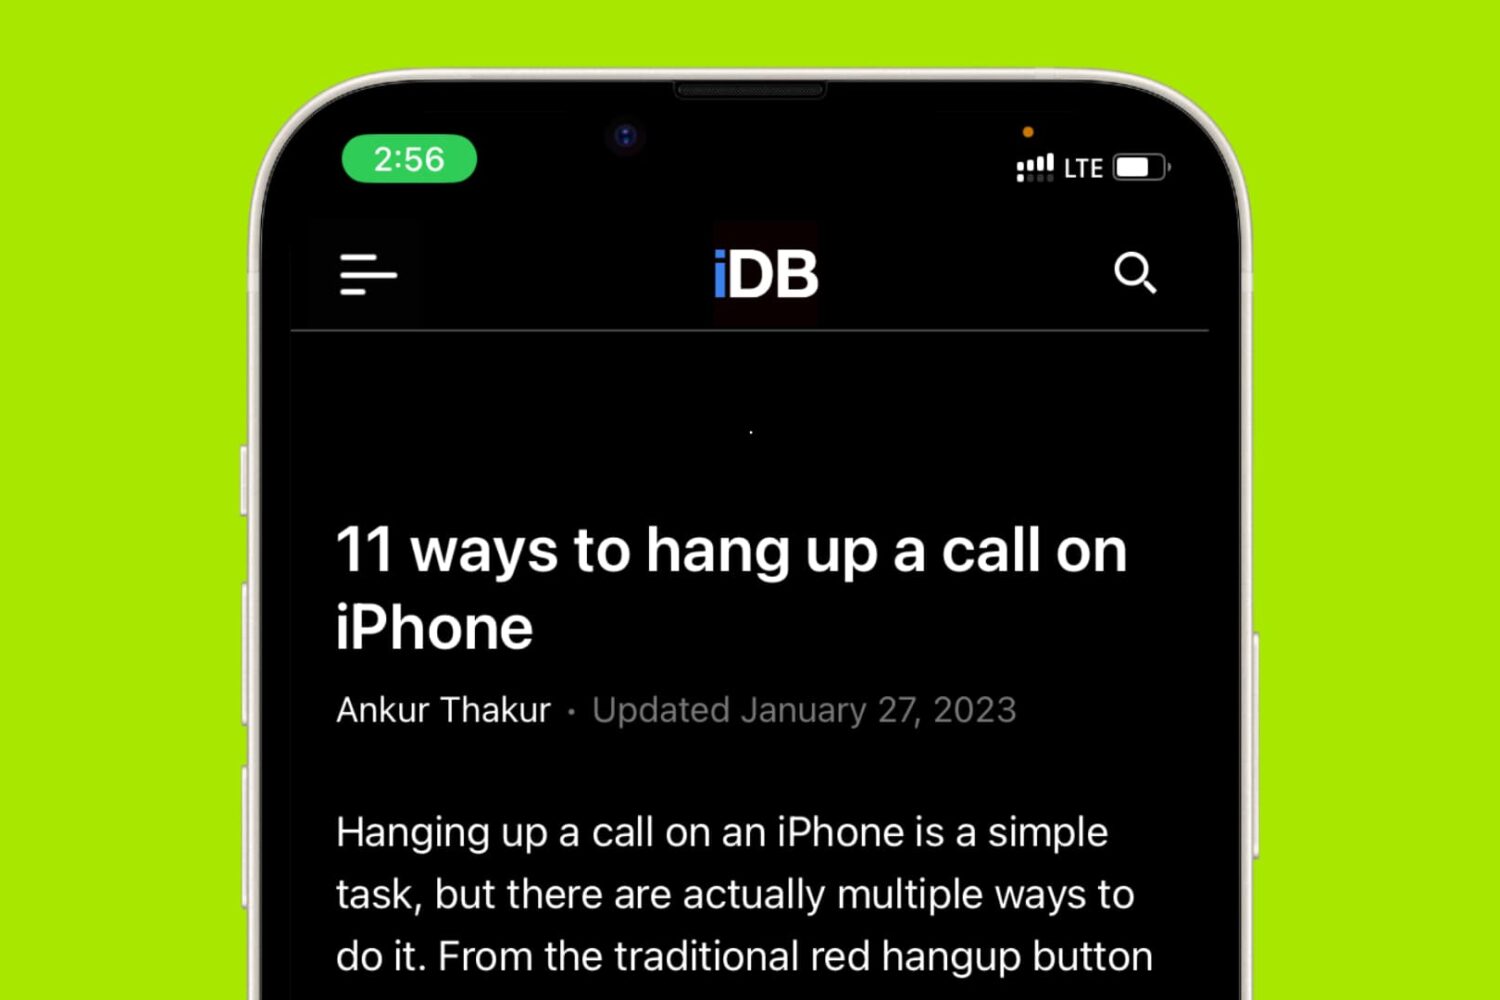 iDB open in Safari on iPhone during a phone call